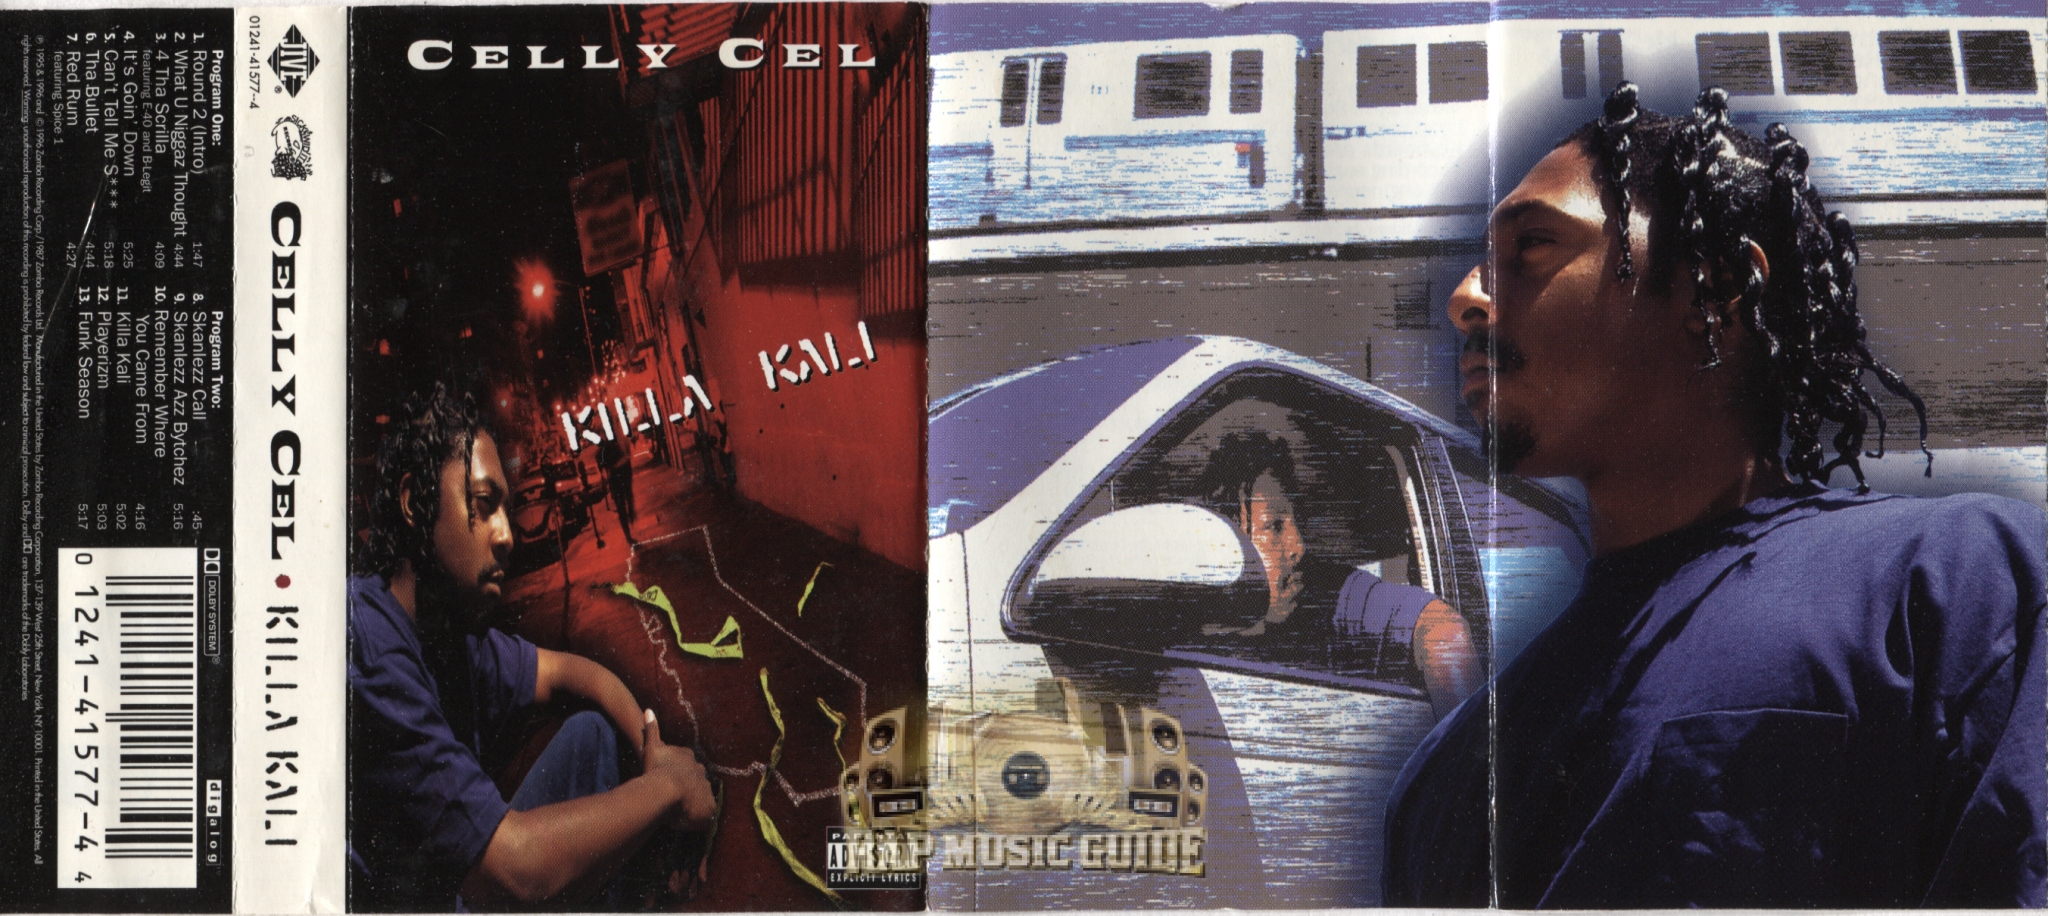 Celly Cel - Killa Kali: Cassette Tape | Rap Music Guide